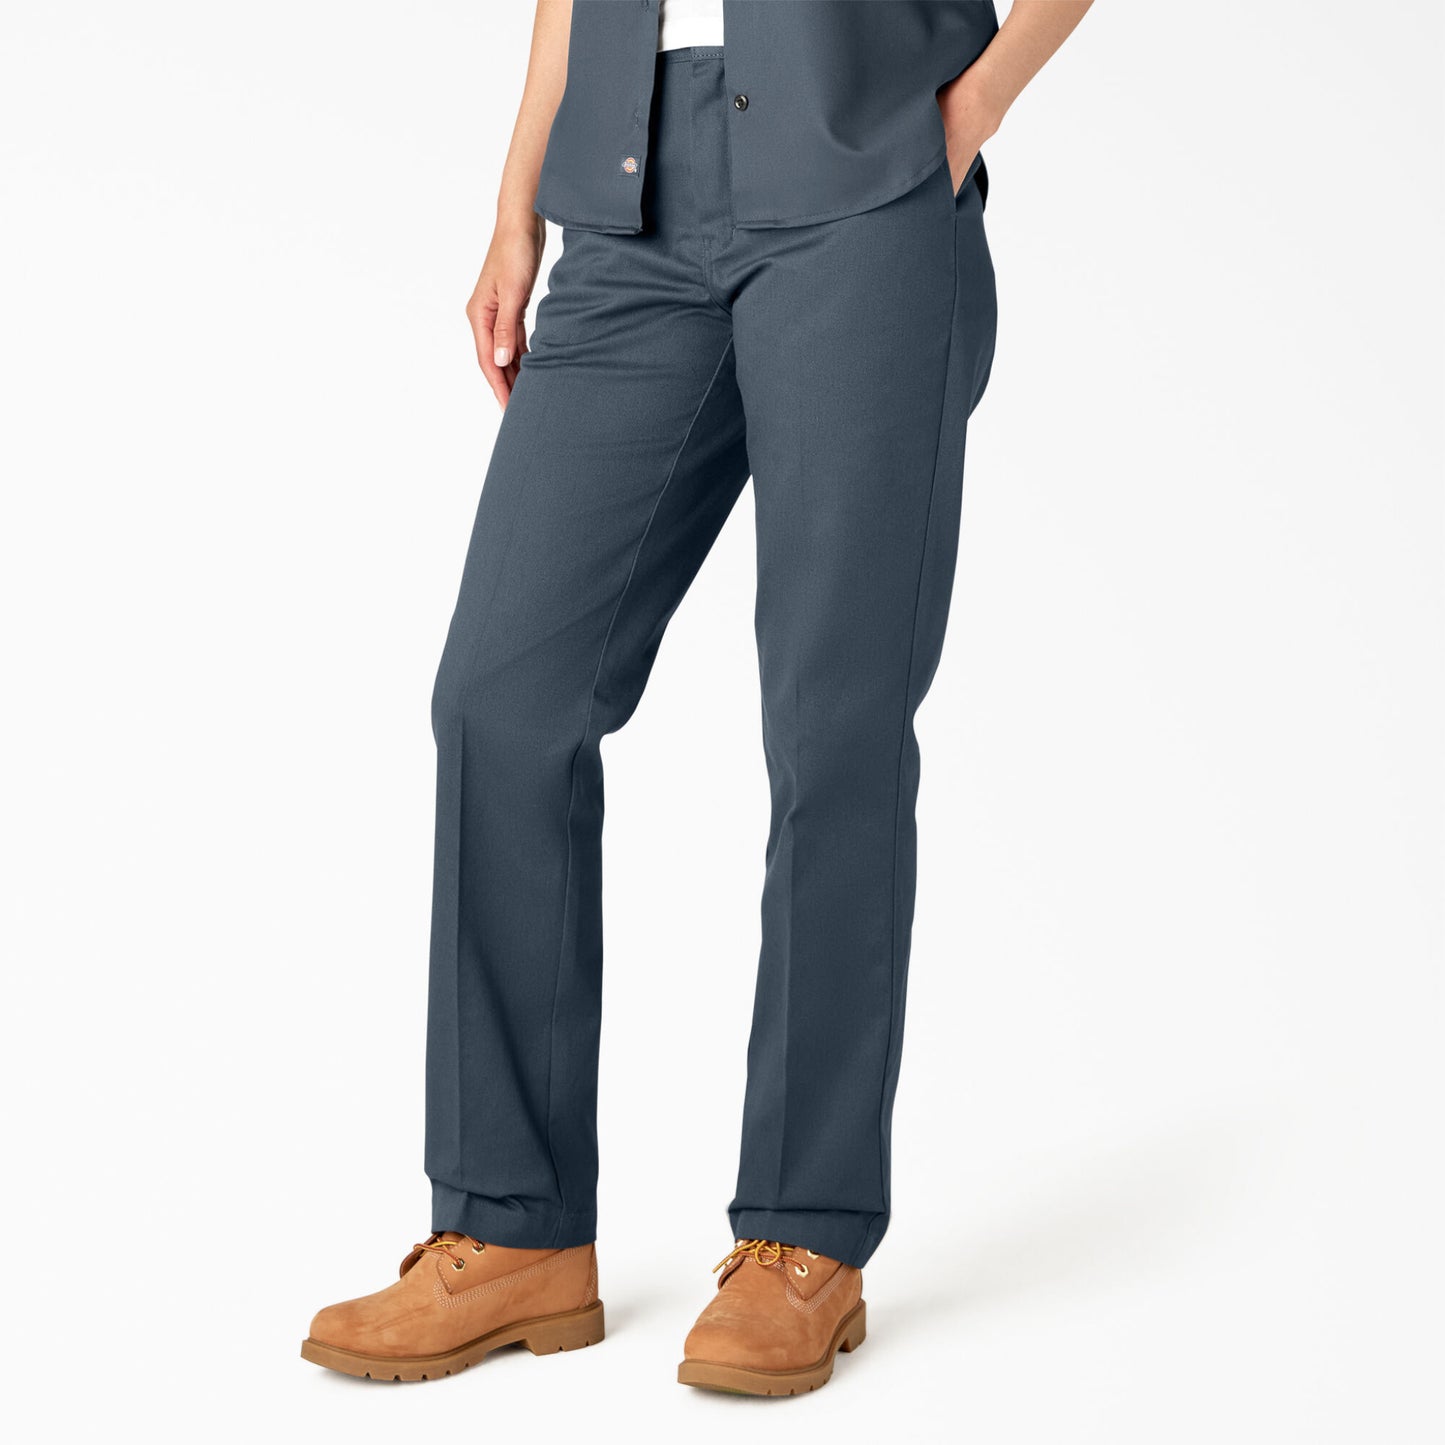 Dickies Women's 874® Work Pants - Charcoal